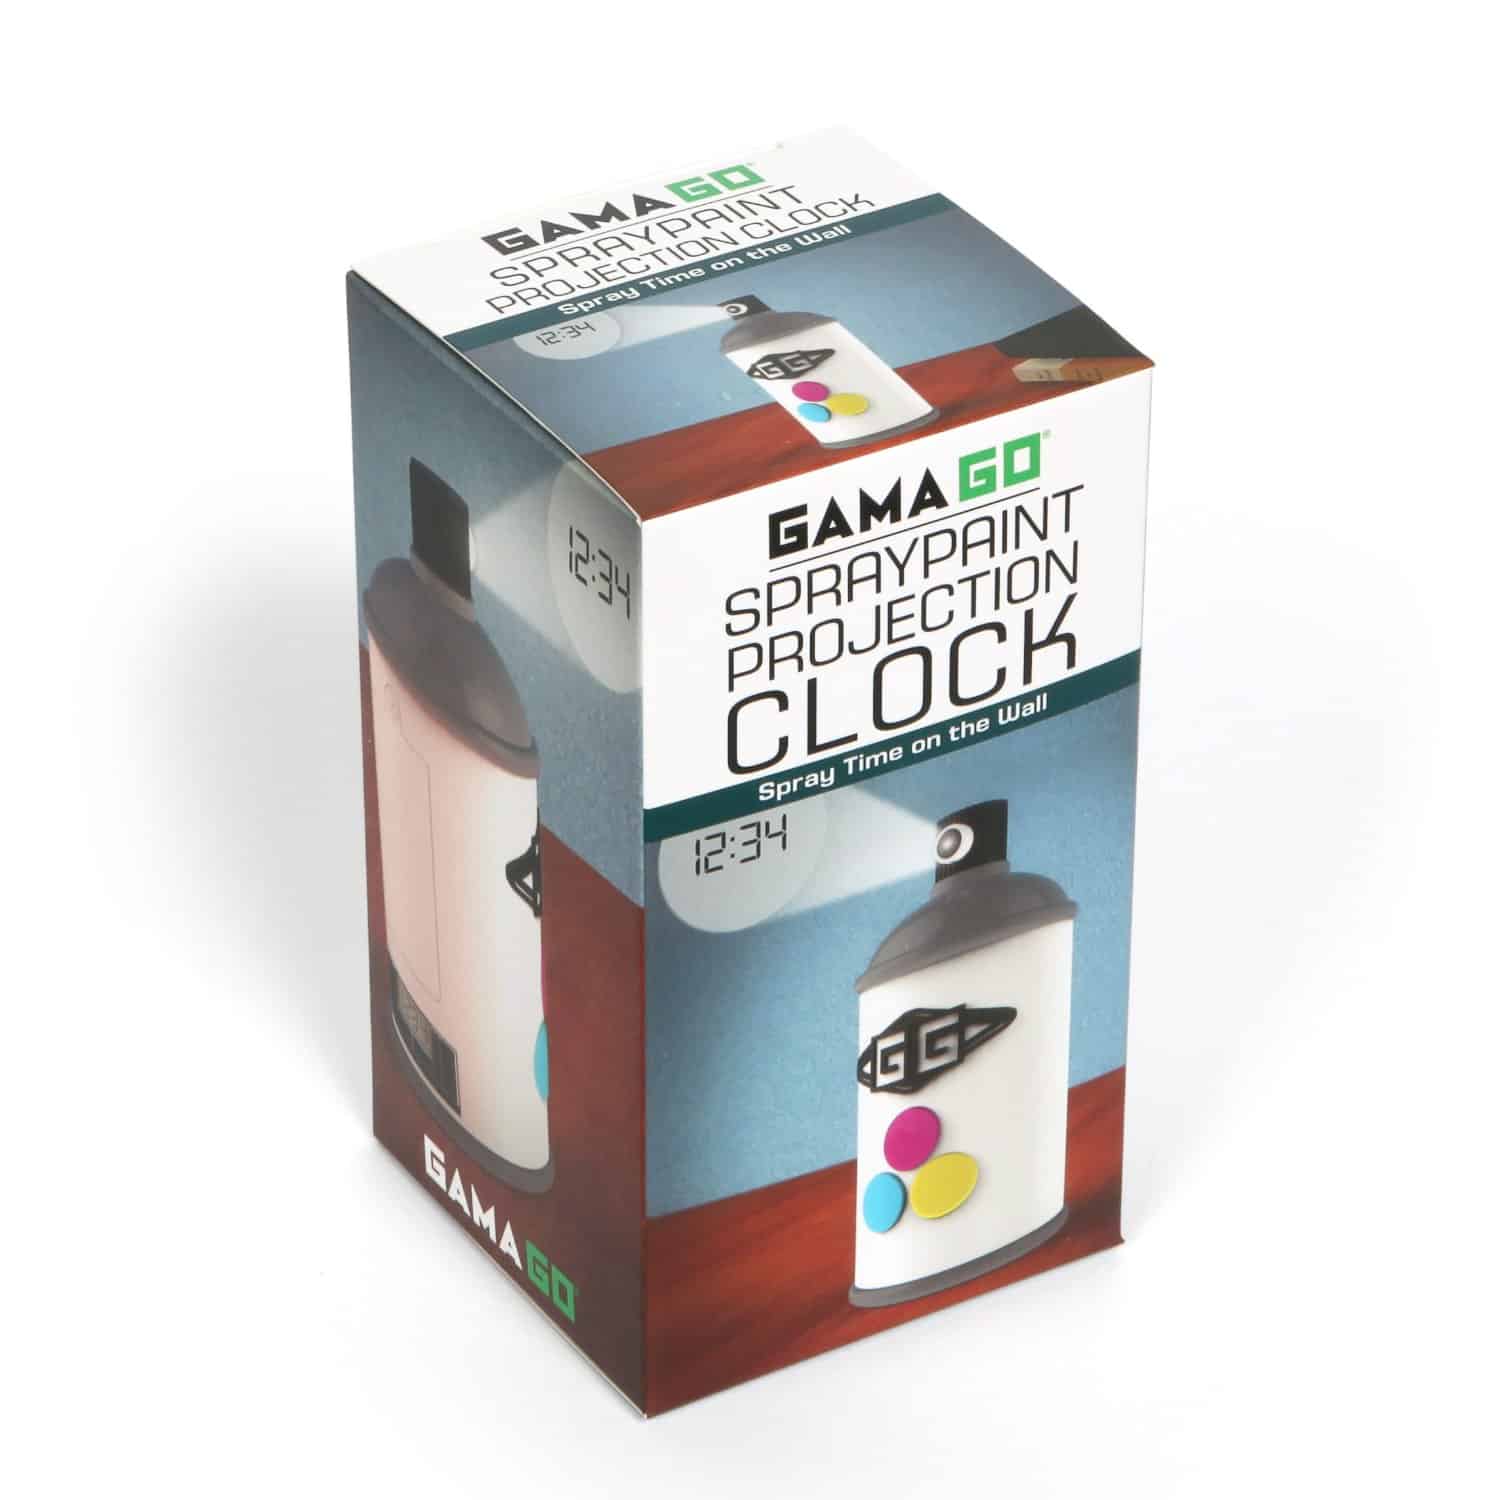 Gamago Spraycan Projection Clock Fun Product